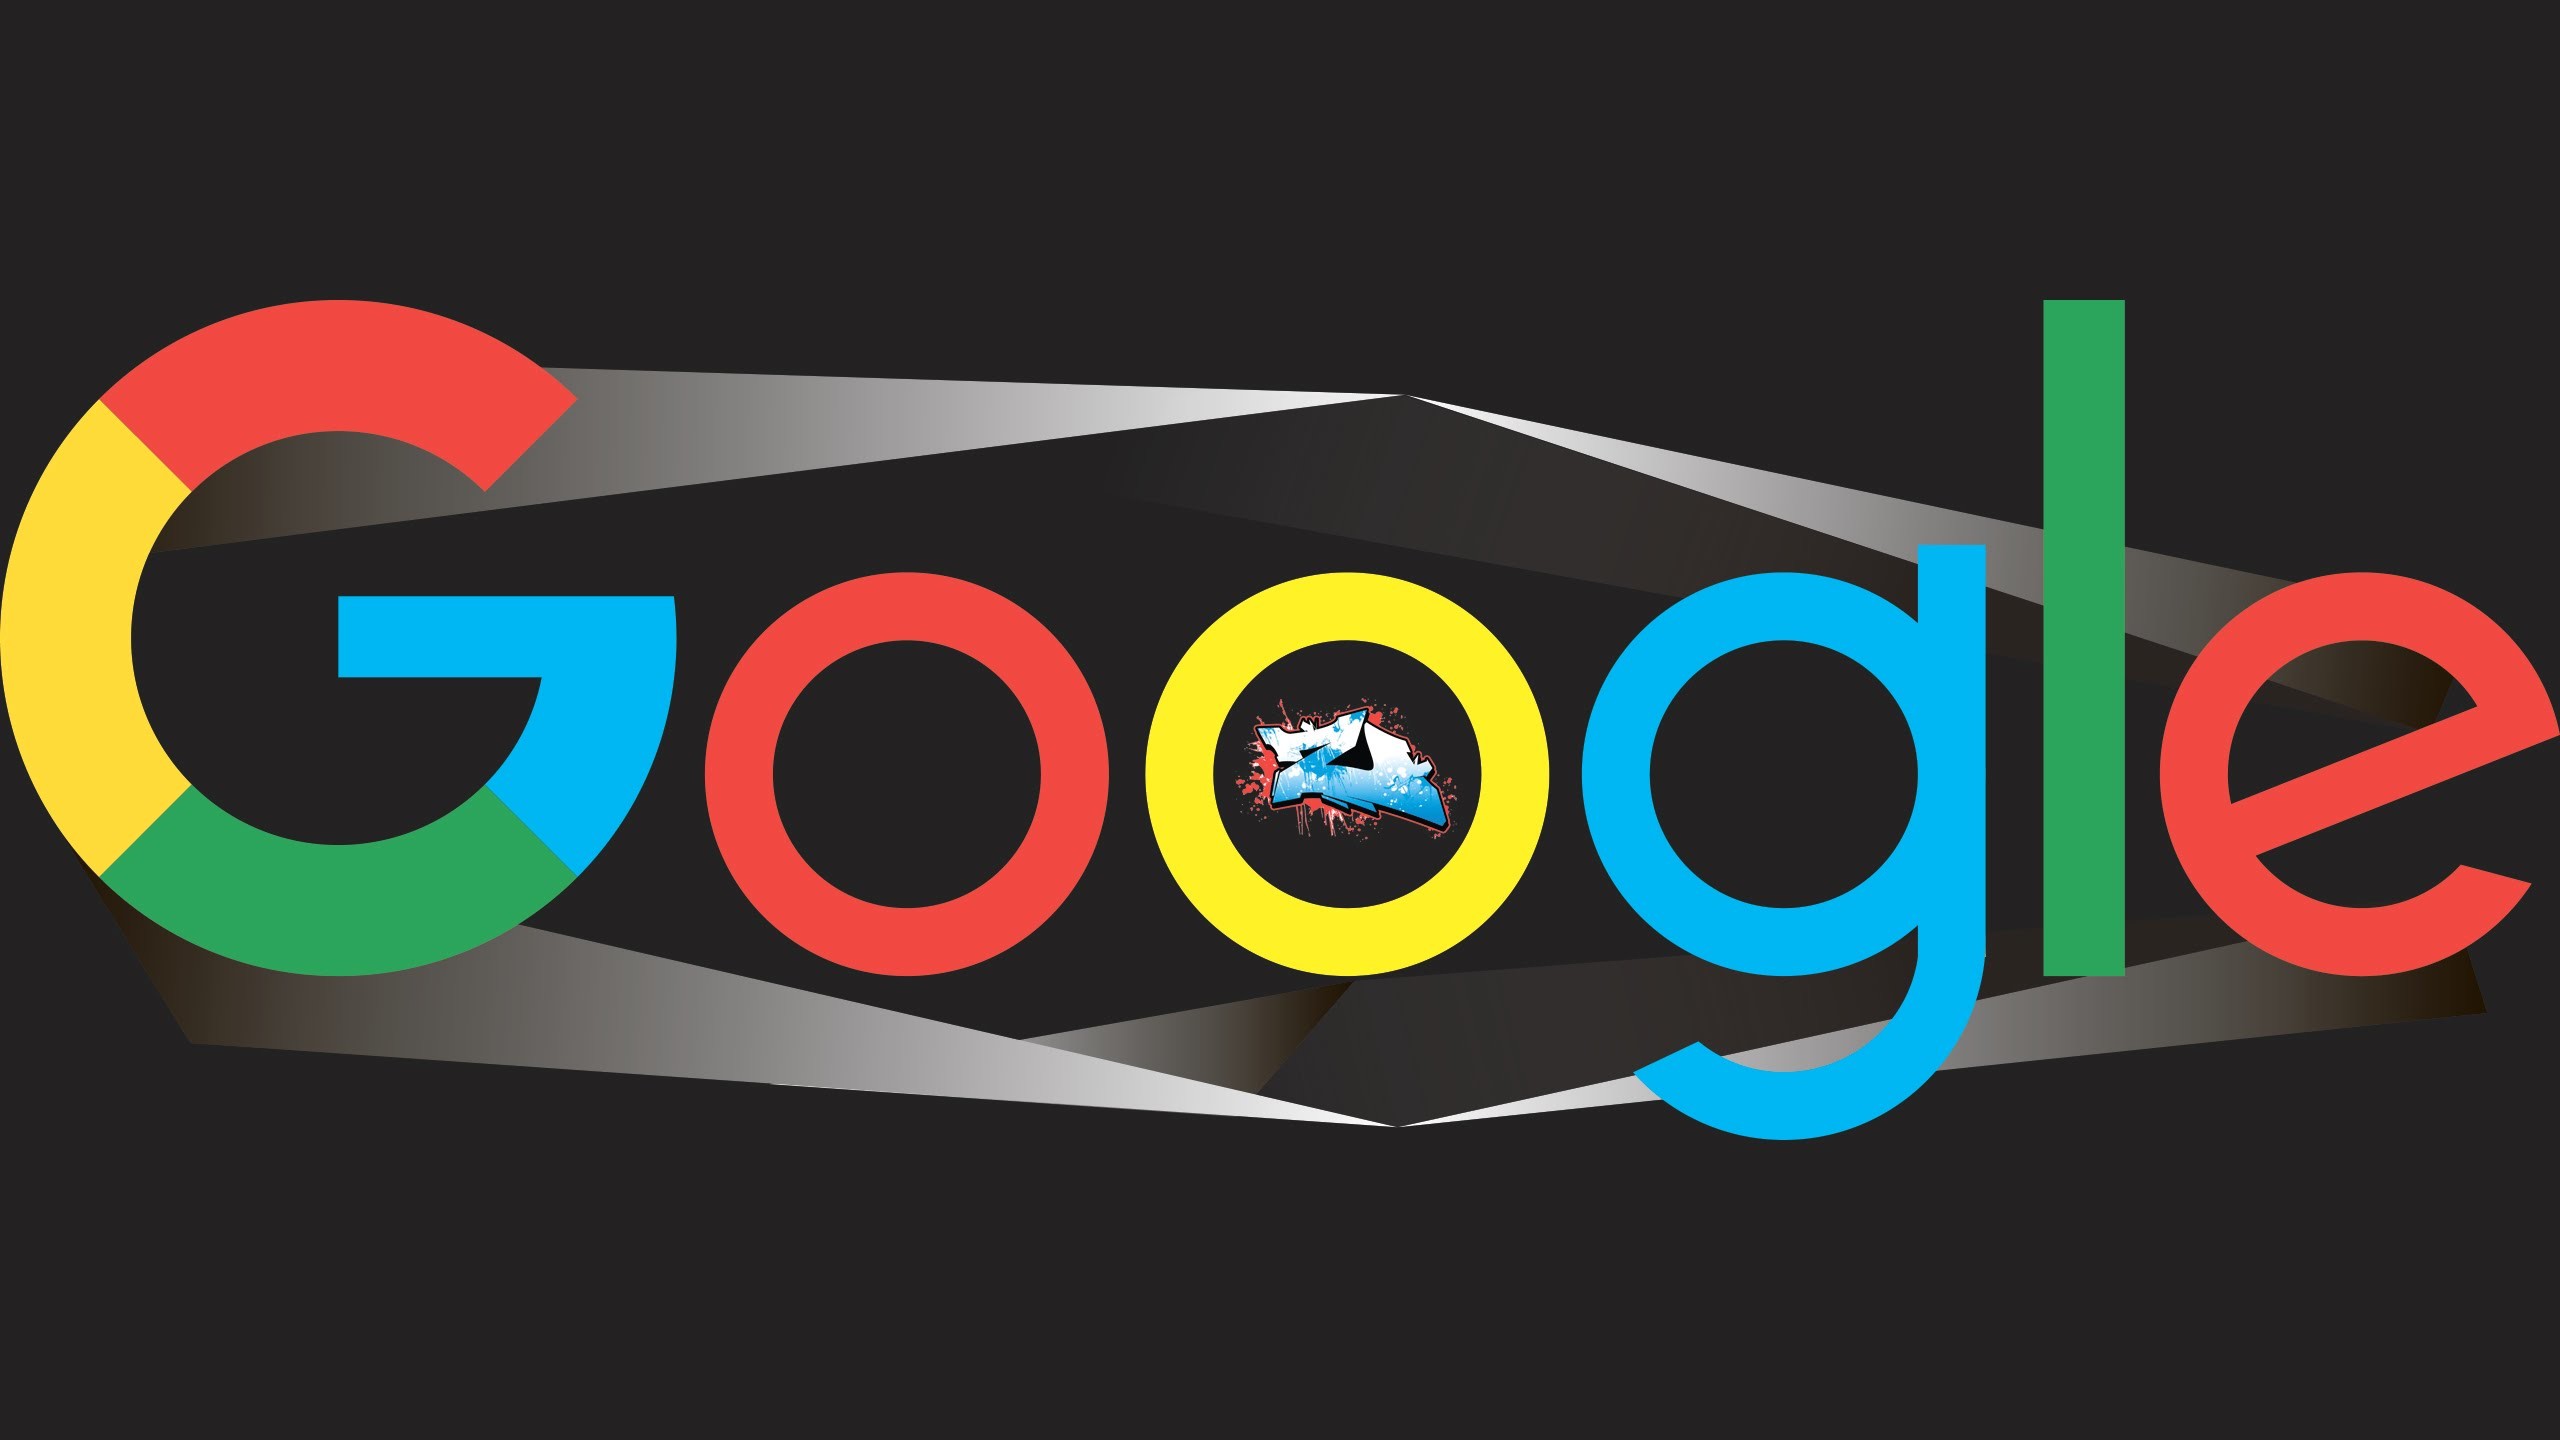 2560x1440 Illustrator SpeedArt - New Google logo(2015)